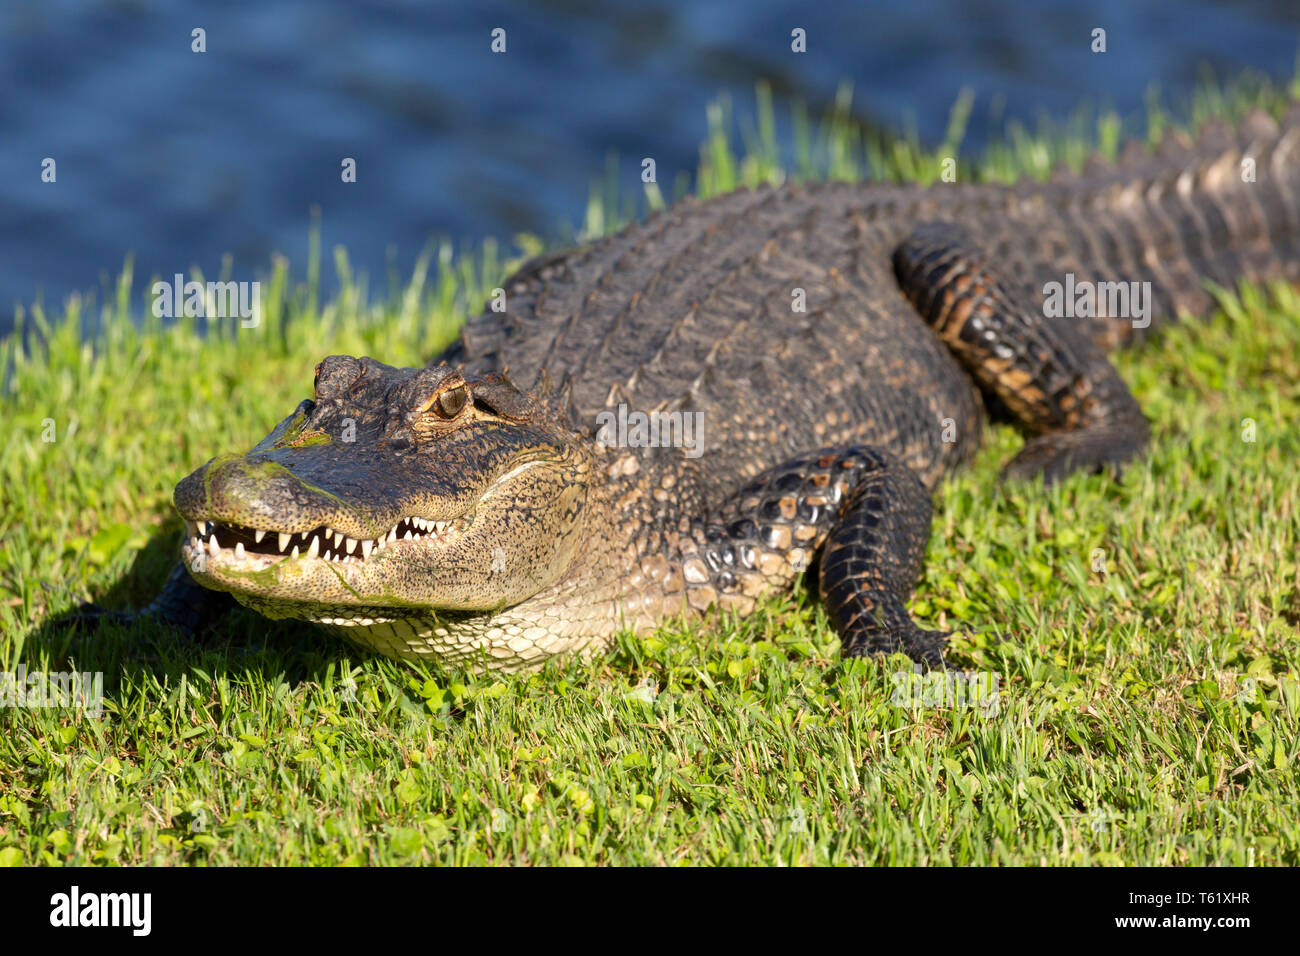 An American alligator (Alligator mississippiensis) near Charleston in South Carolina, USA. The alligator basks in sunshine. Stock Photo